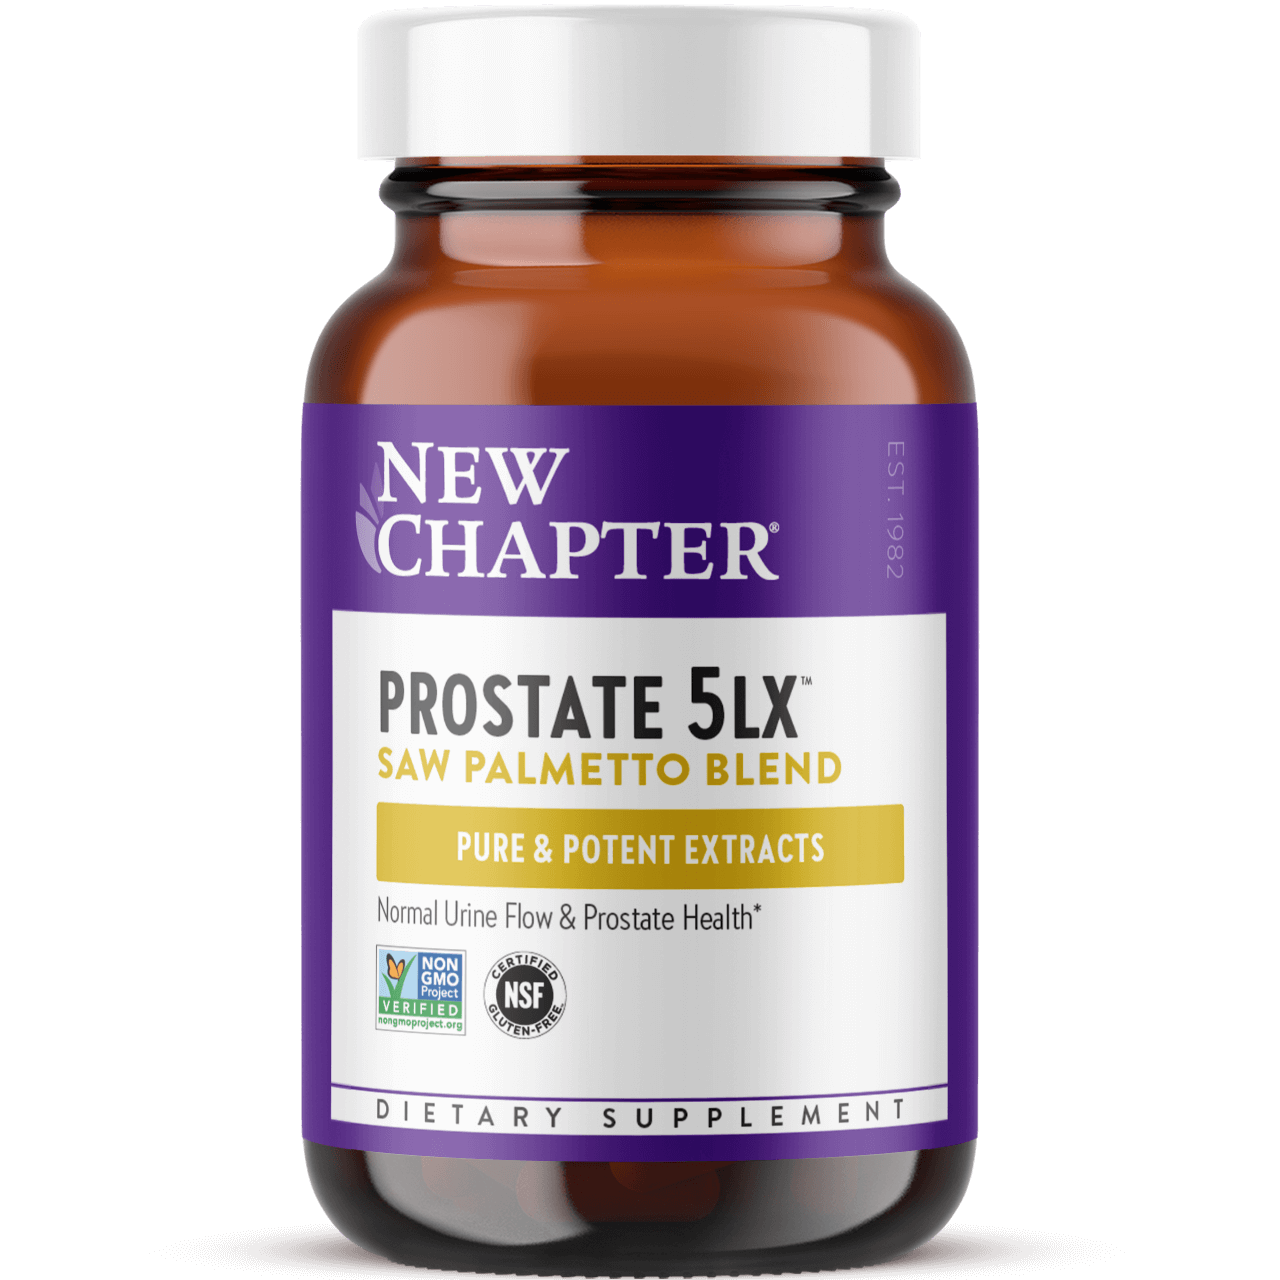 Prostate 5LX™: Saw Palmetto Blend